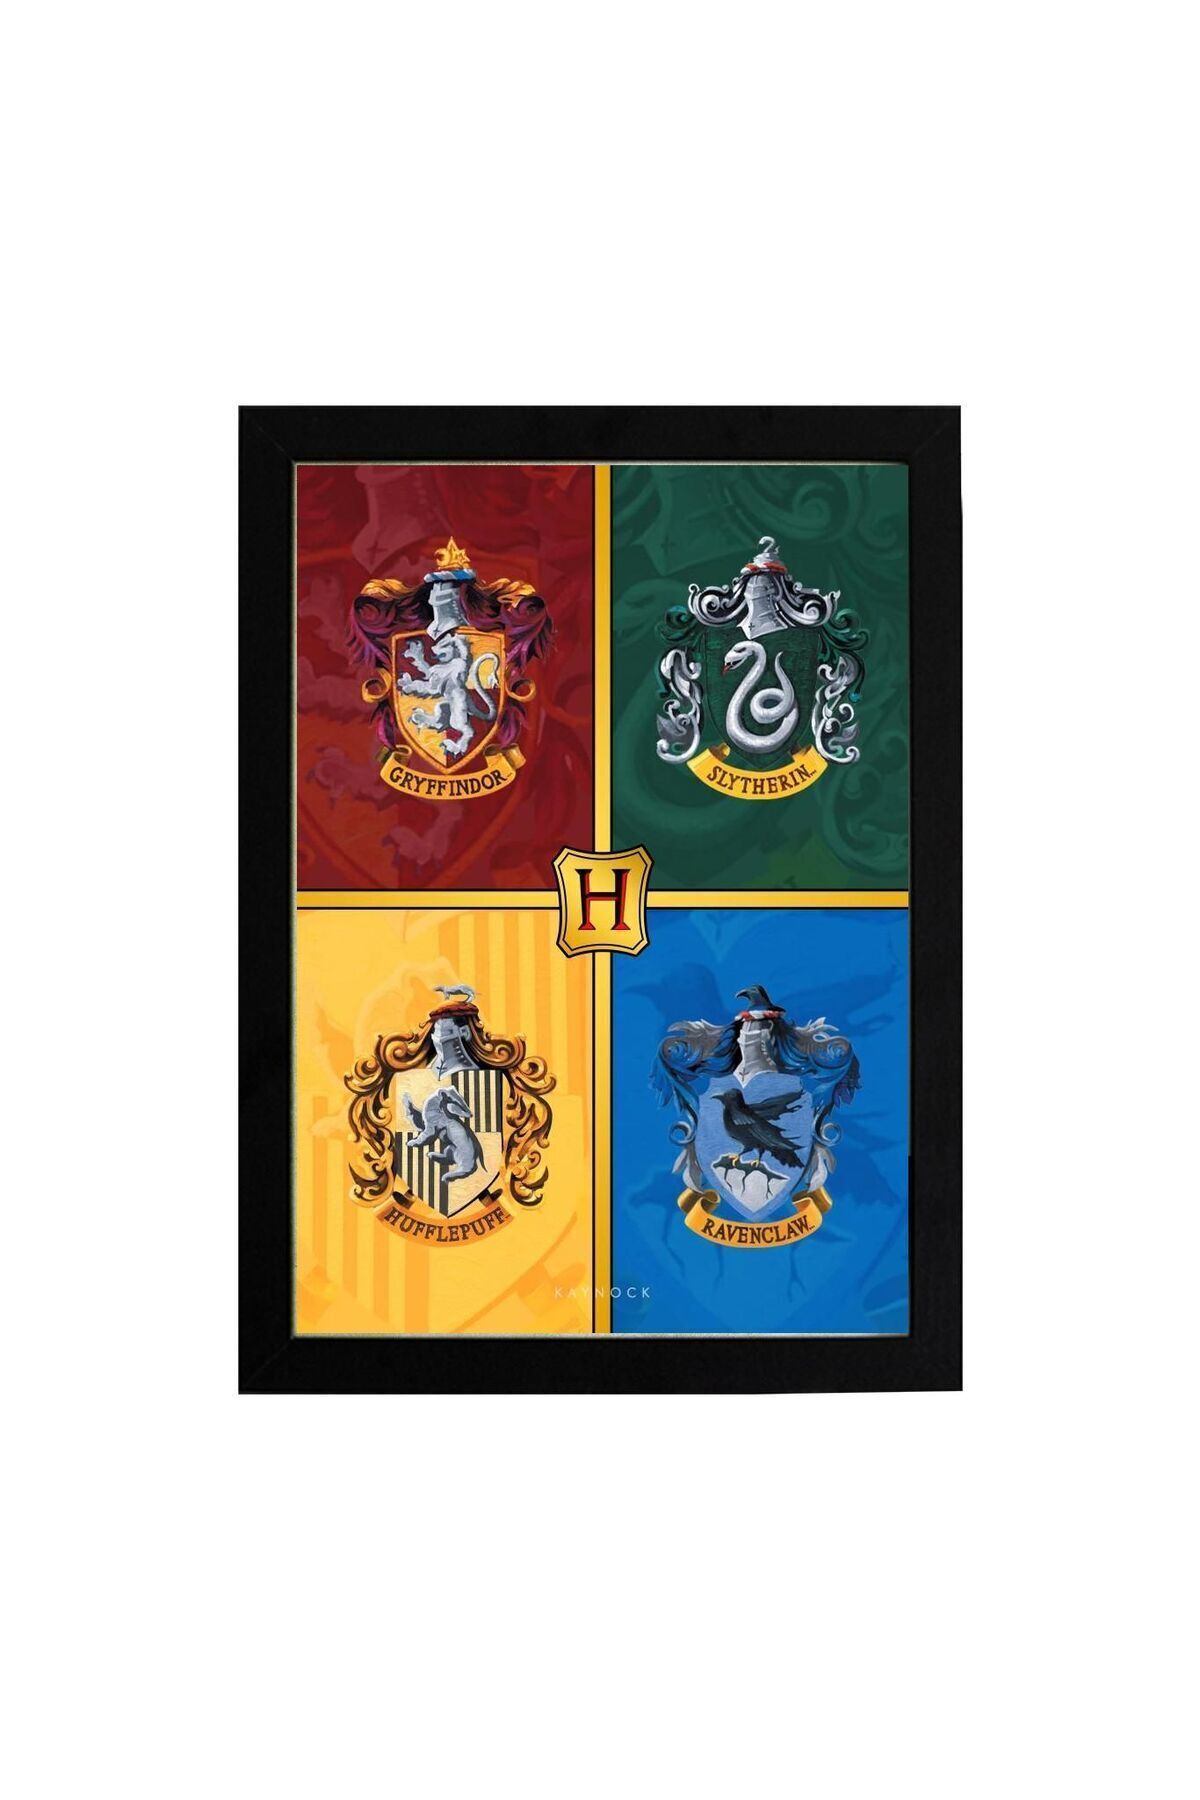 KAYNOCK Hogwarts, Harry Potter, Dizi-film, Poster Tablo Dijital Tasarım Tablo